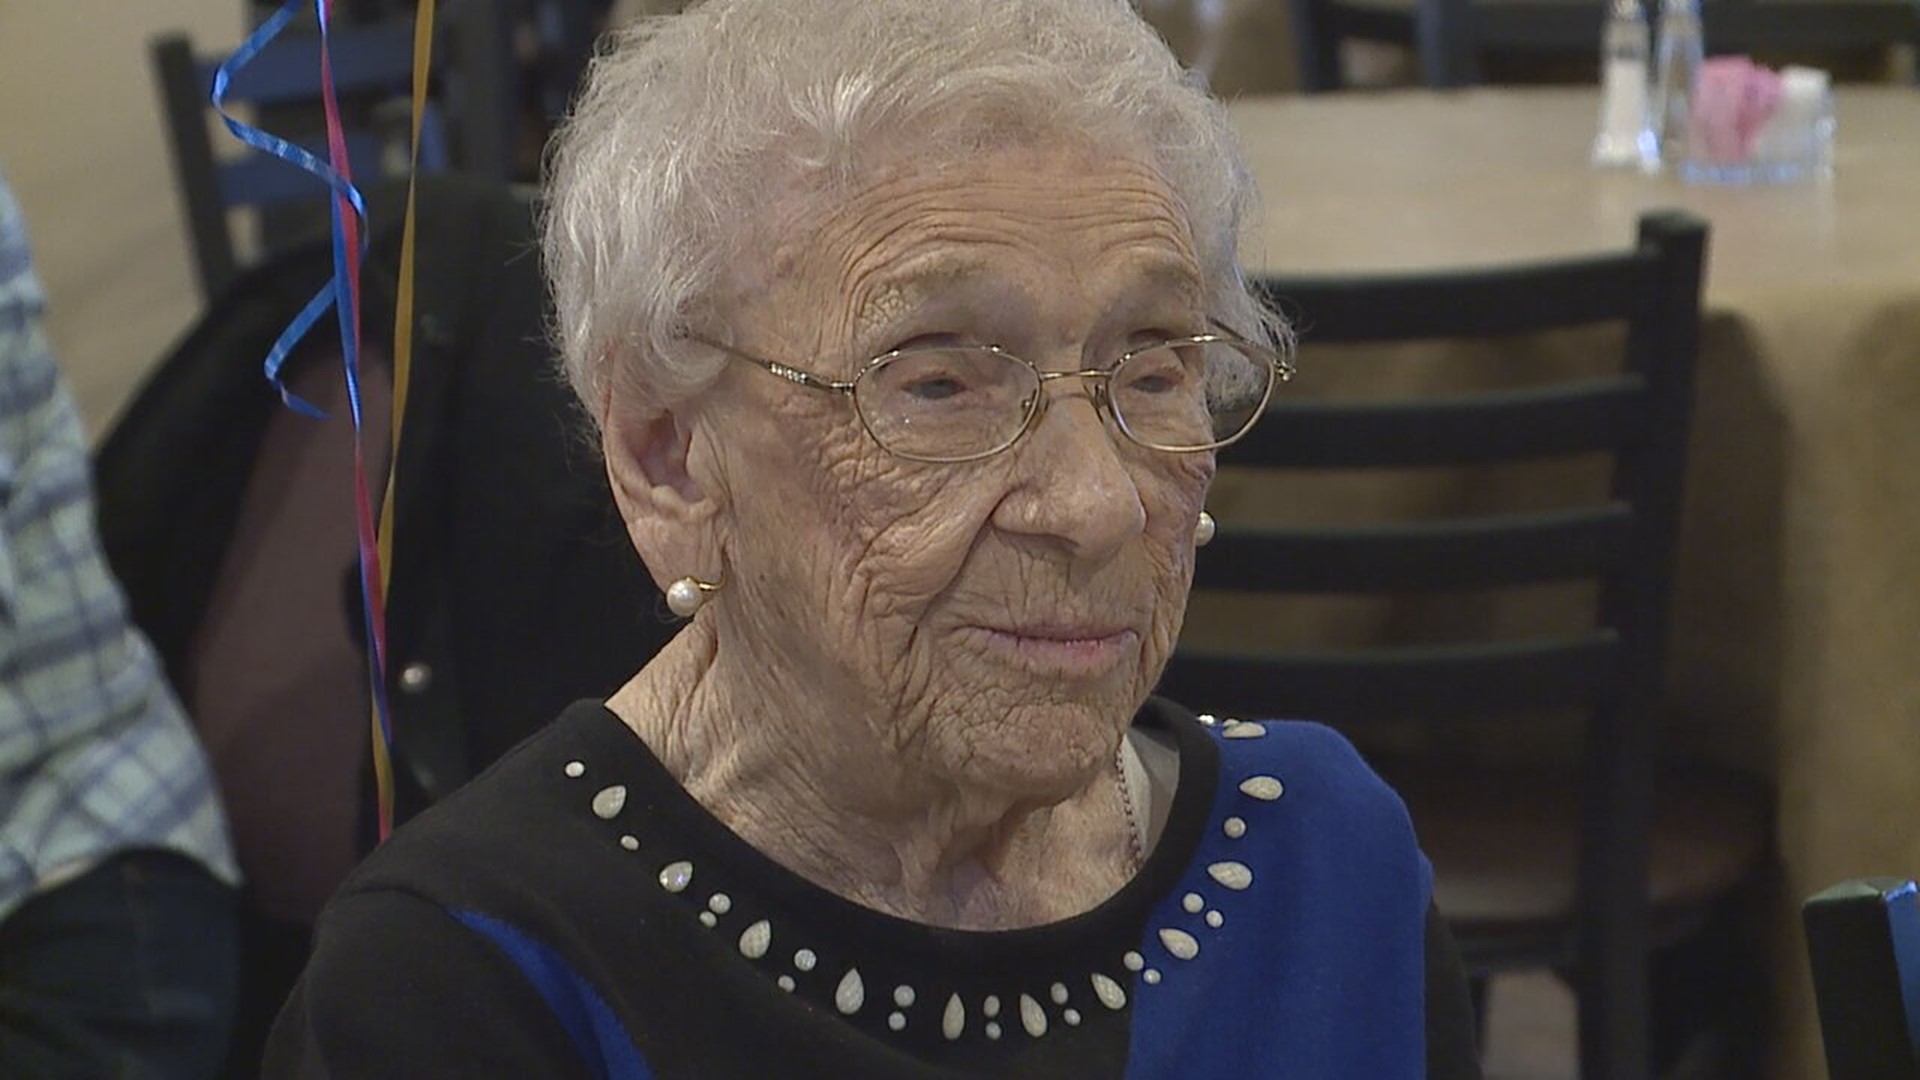 On Monday, Laura Albright celebrates 105 years of life.